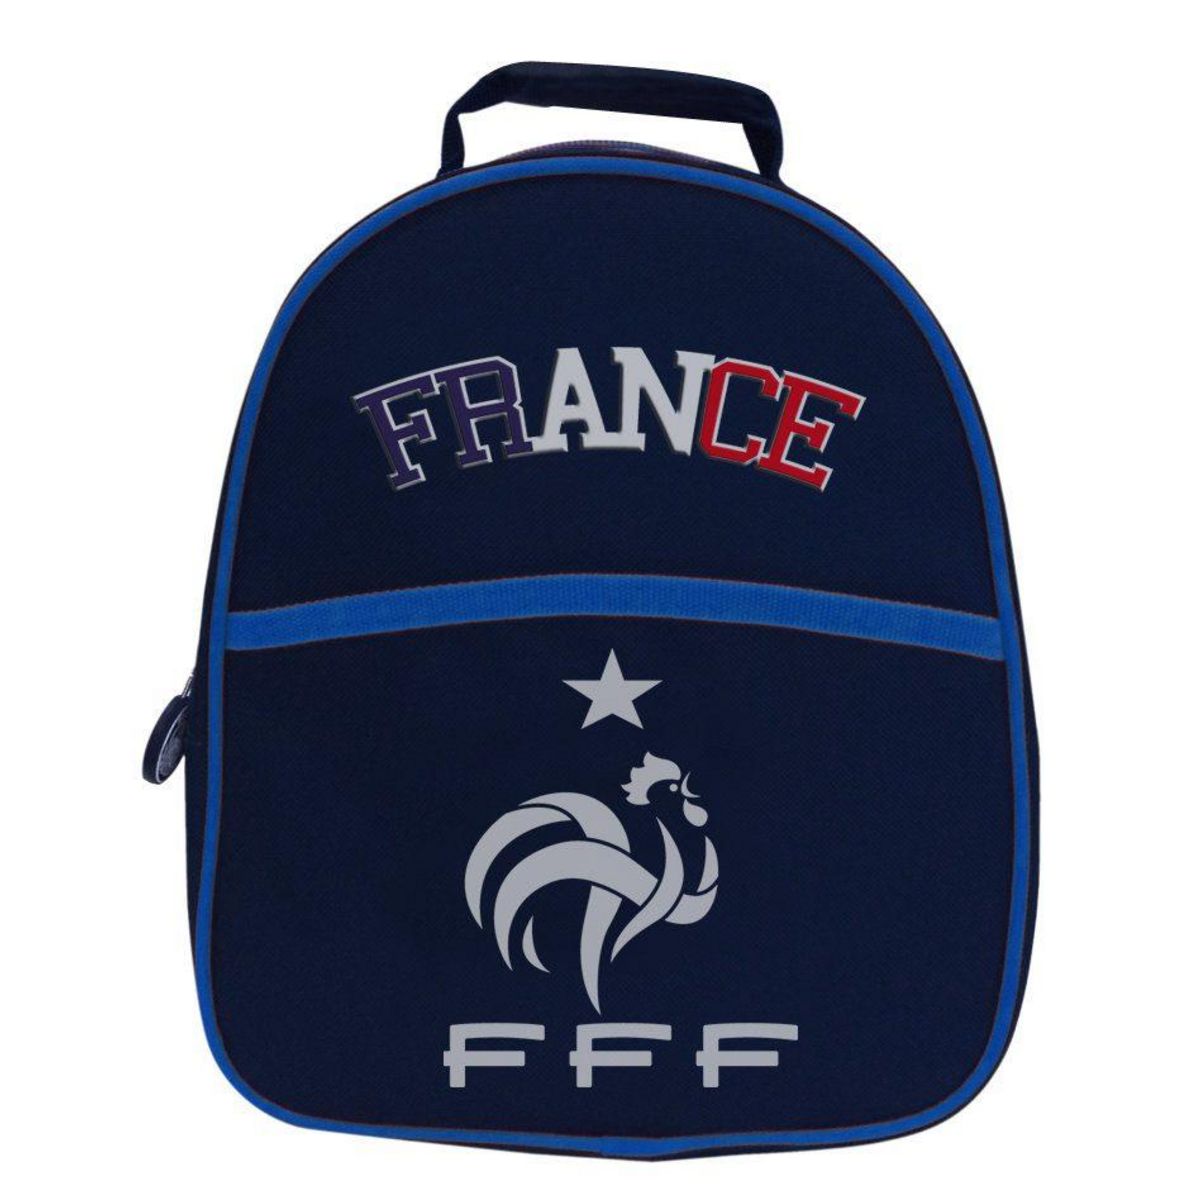 FFF Sac à dos enfant - Fédération Française de Football - Bleu